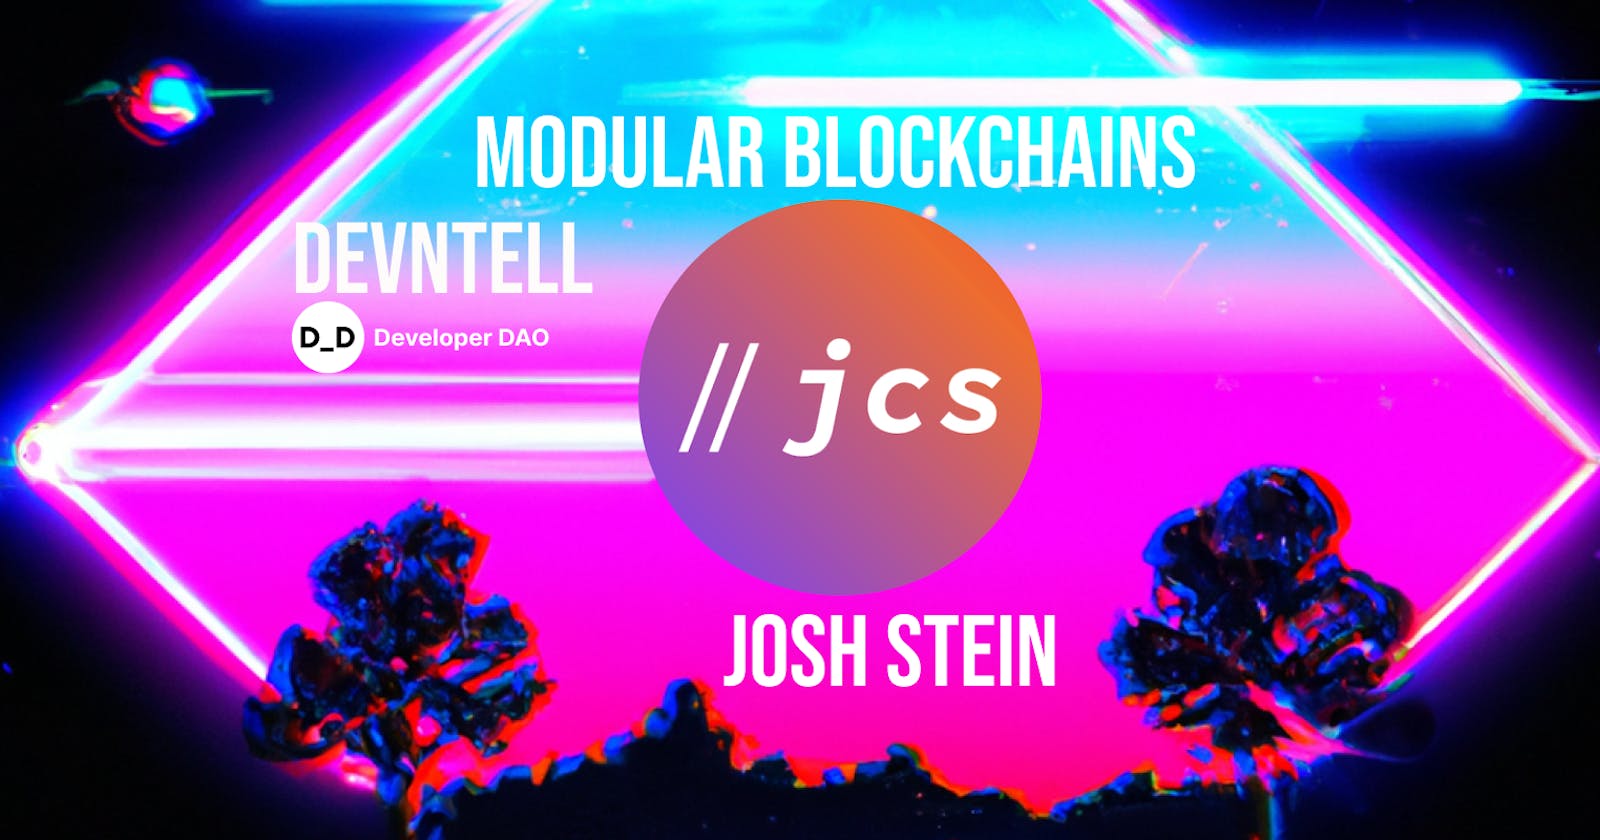 DevNTell - Modular Blockchains